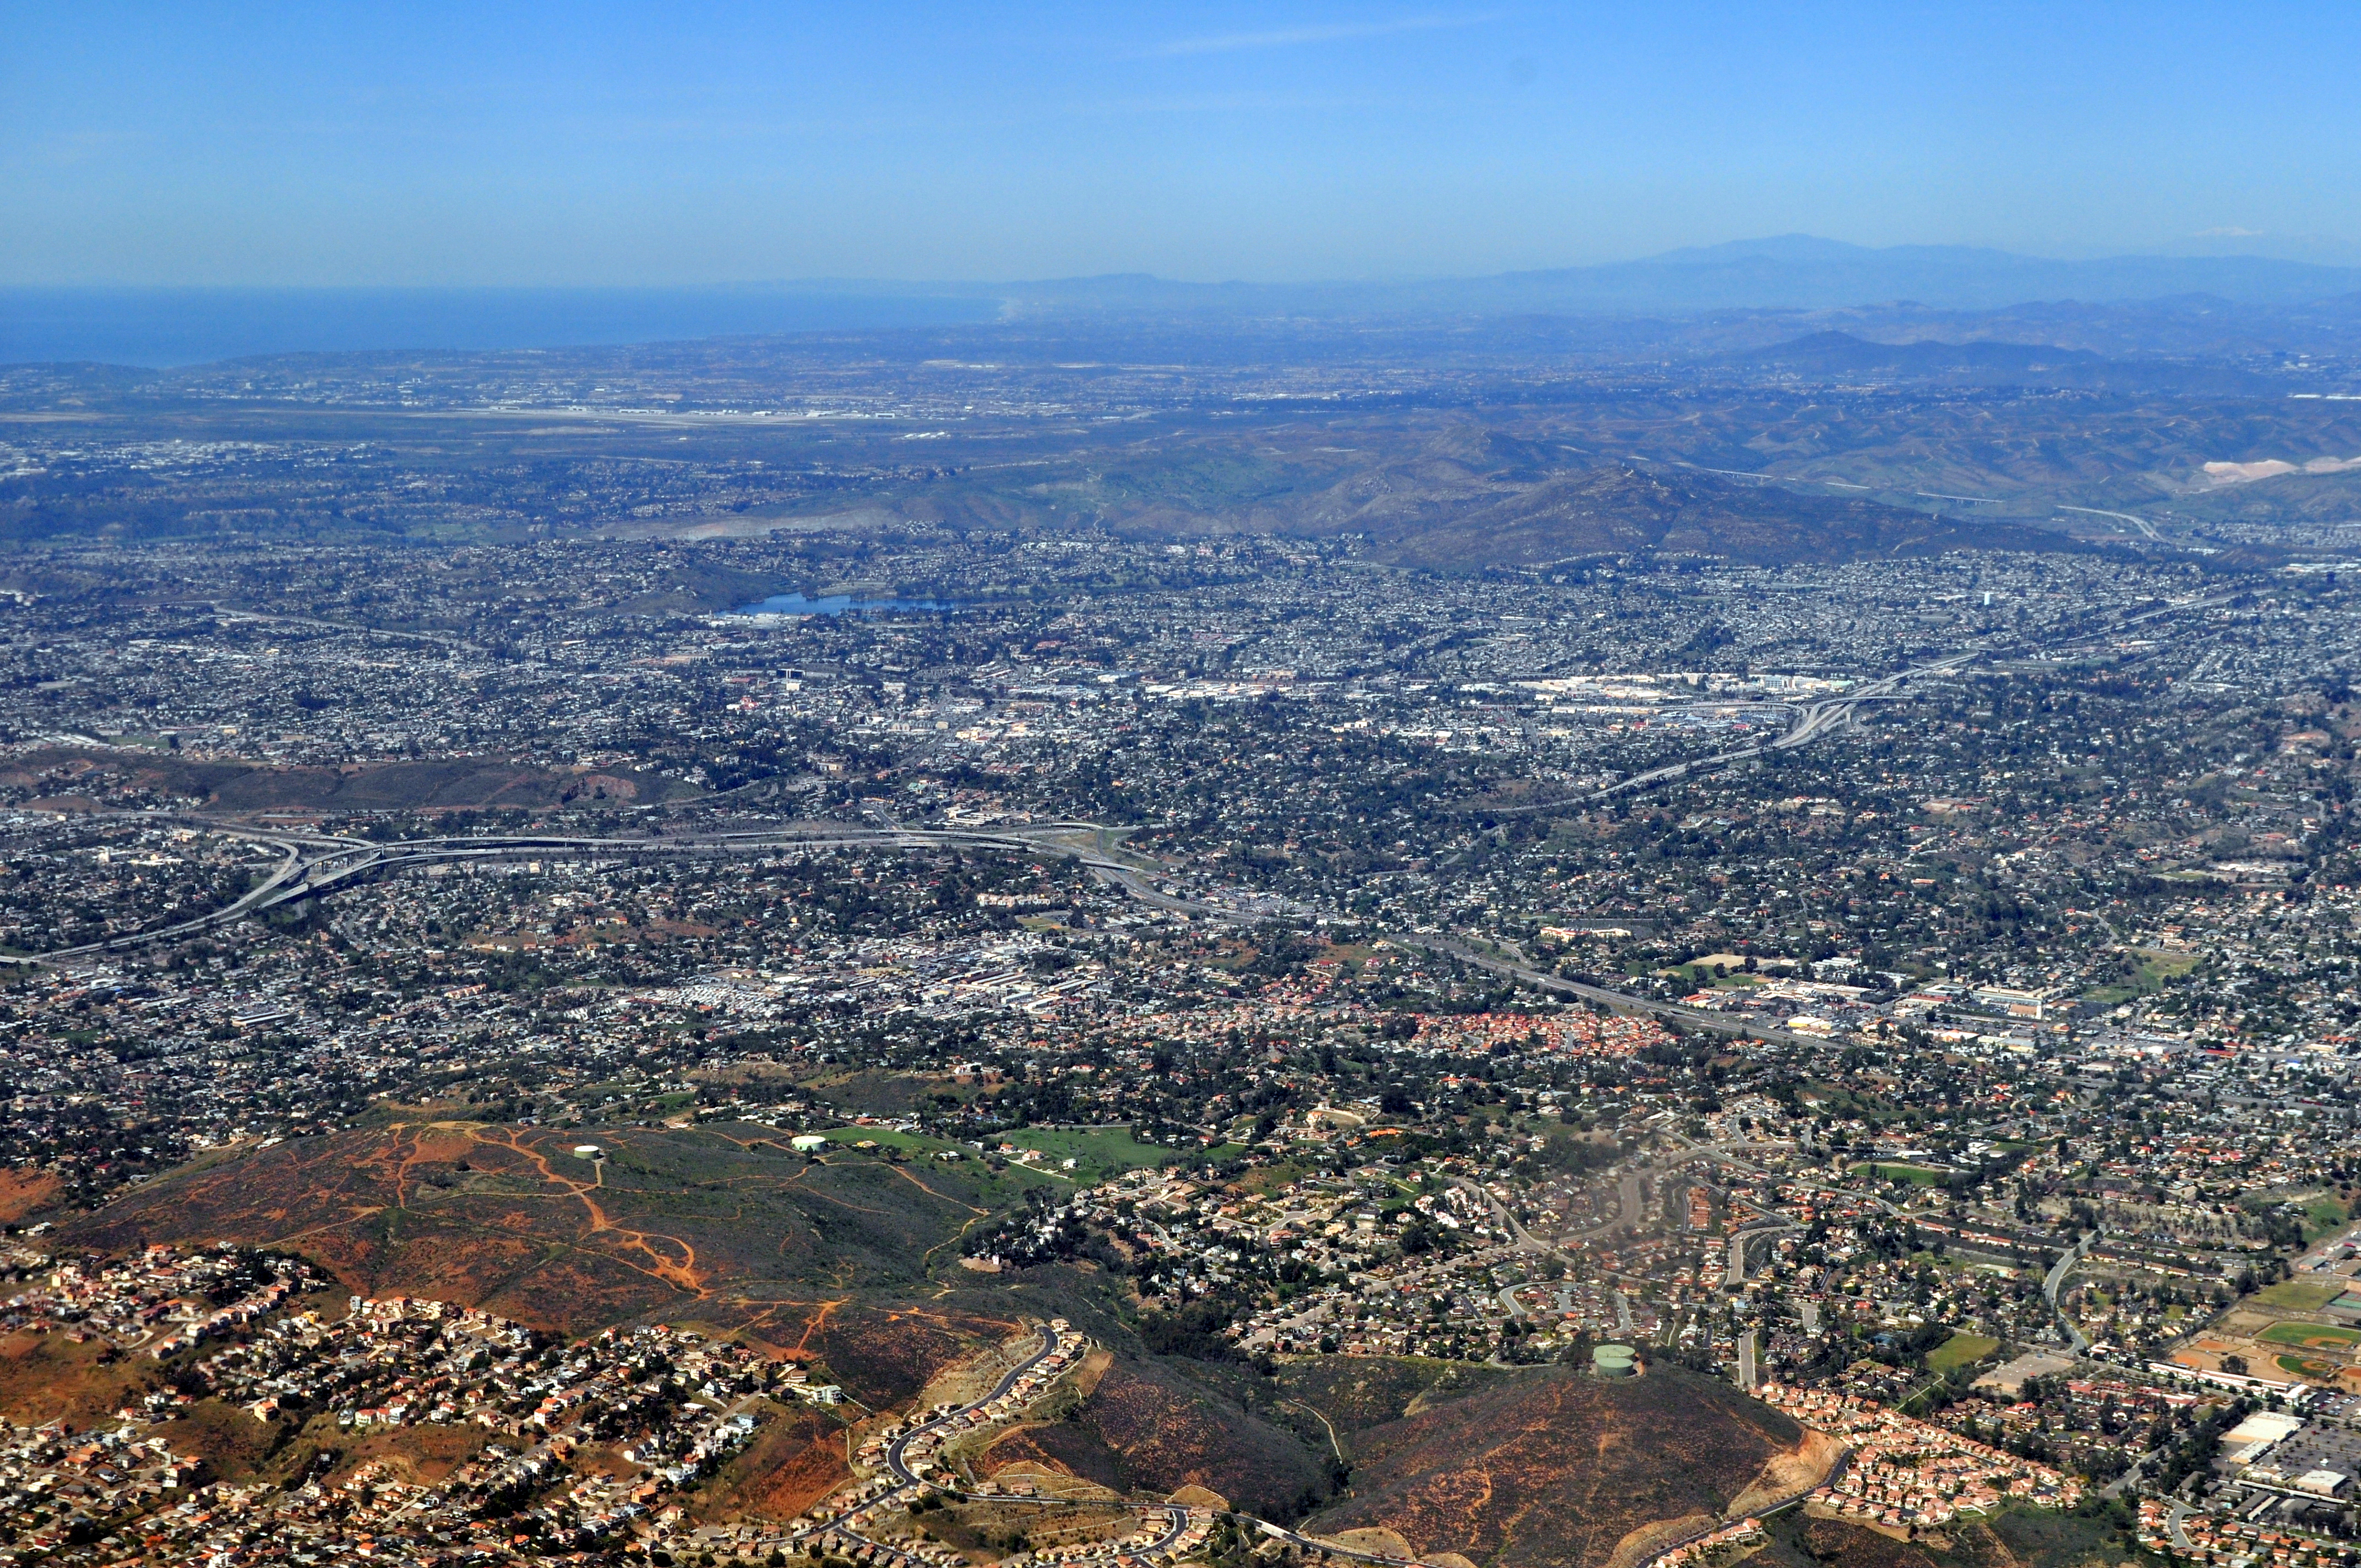 File:Aerial - San Diego County, CA - Lake Murray, La Mesa, El Cajon 02.jpg - Wikimedia ...4288 x 2848